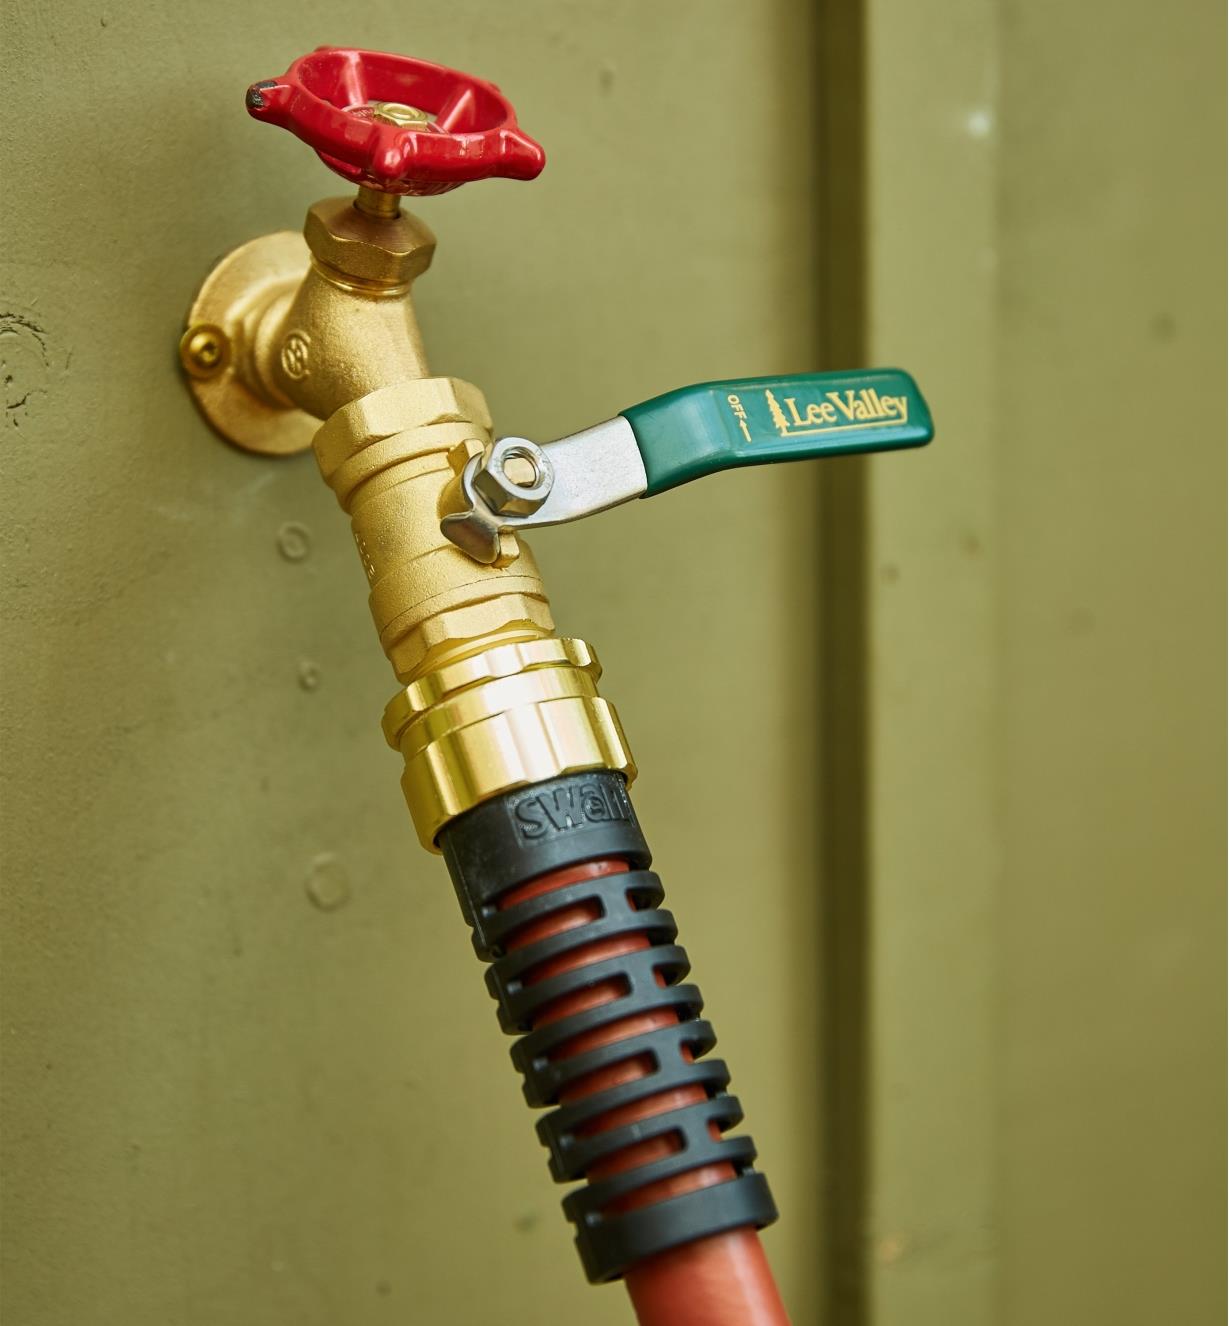 Straight Shut-Off Valve connected between an outdoor faucet and garden hose